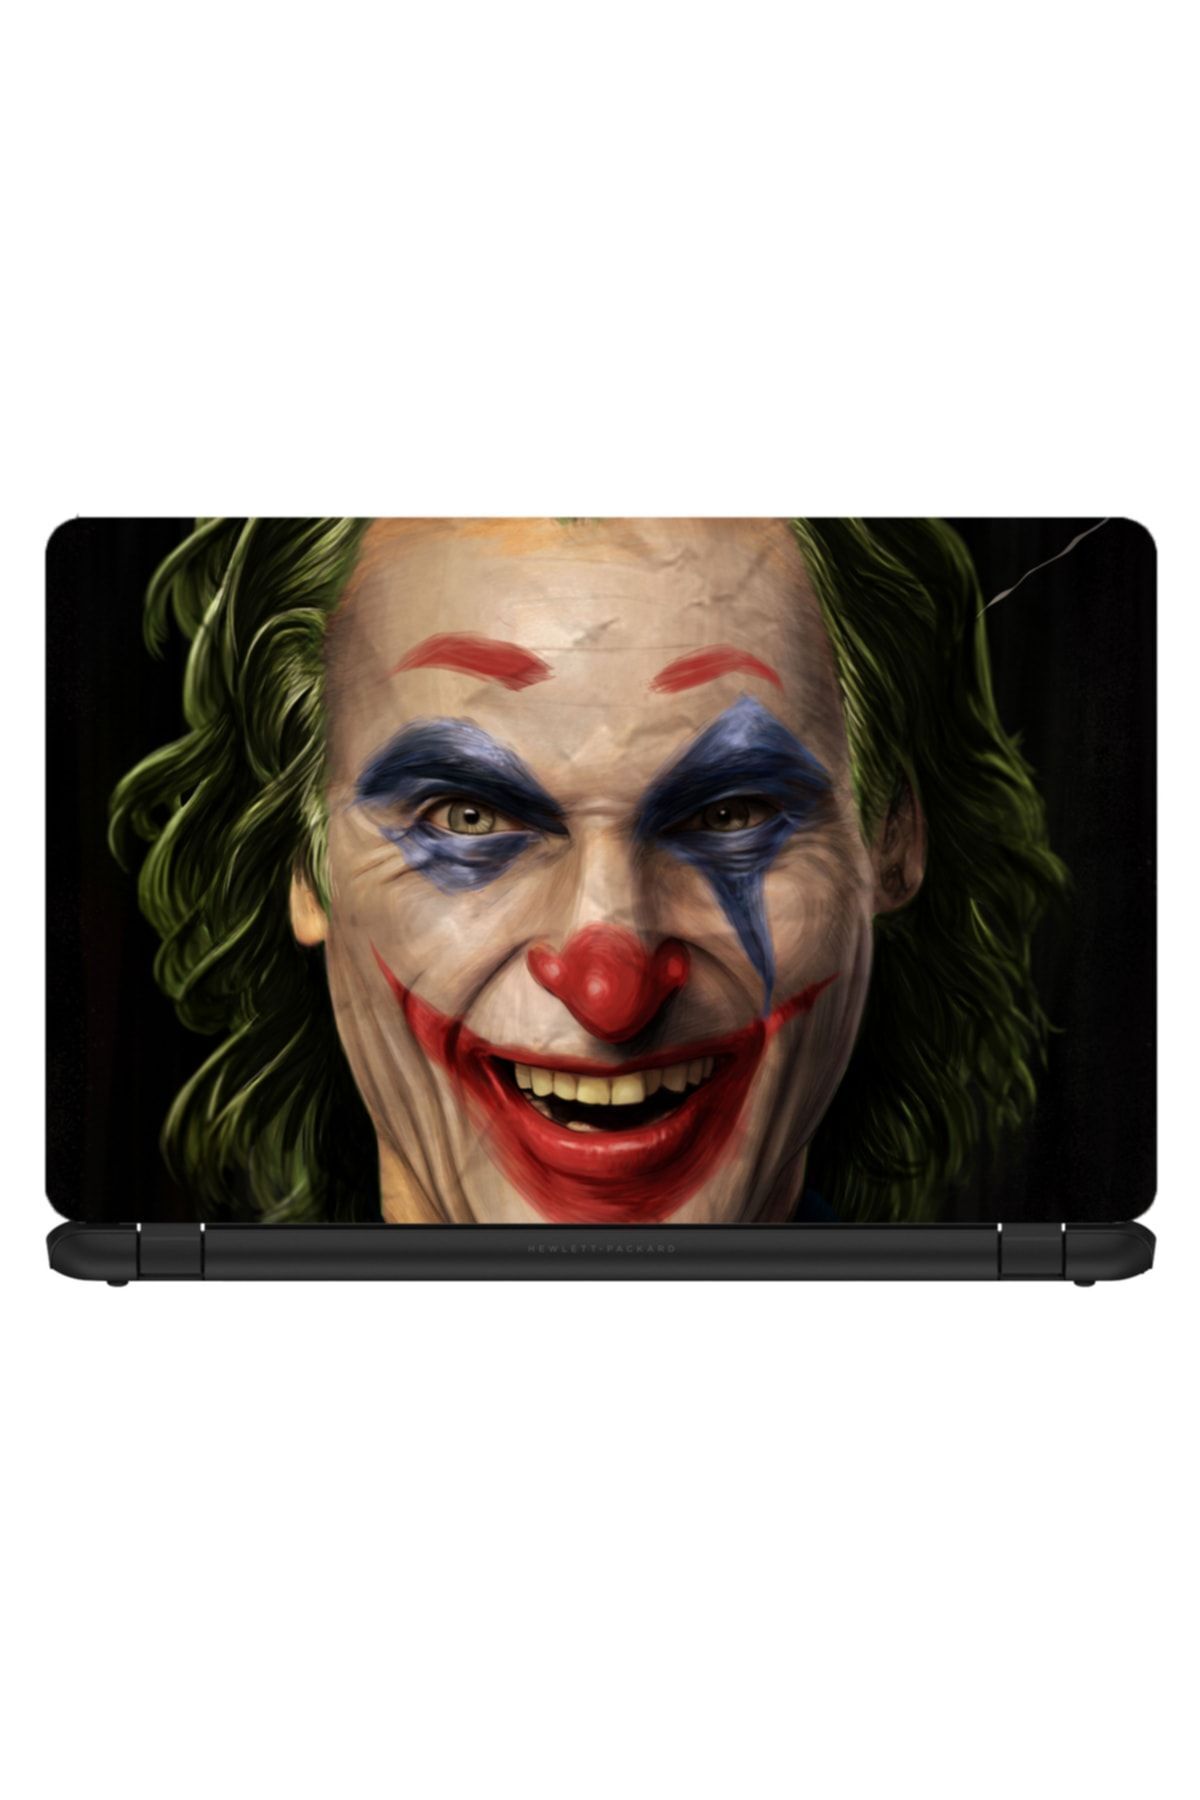 KT Decor Joker -2 Laptop Sticker 15.6 Inch